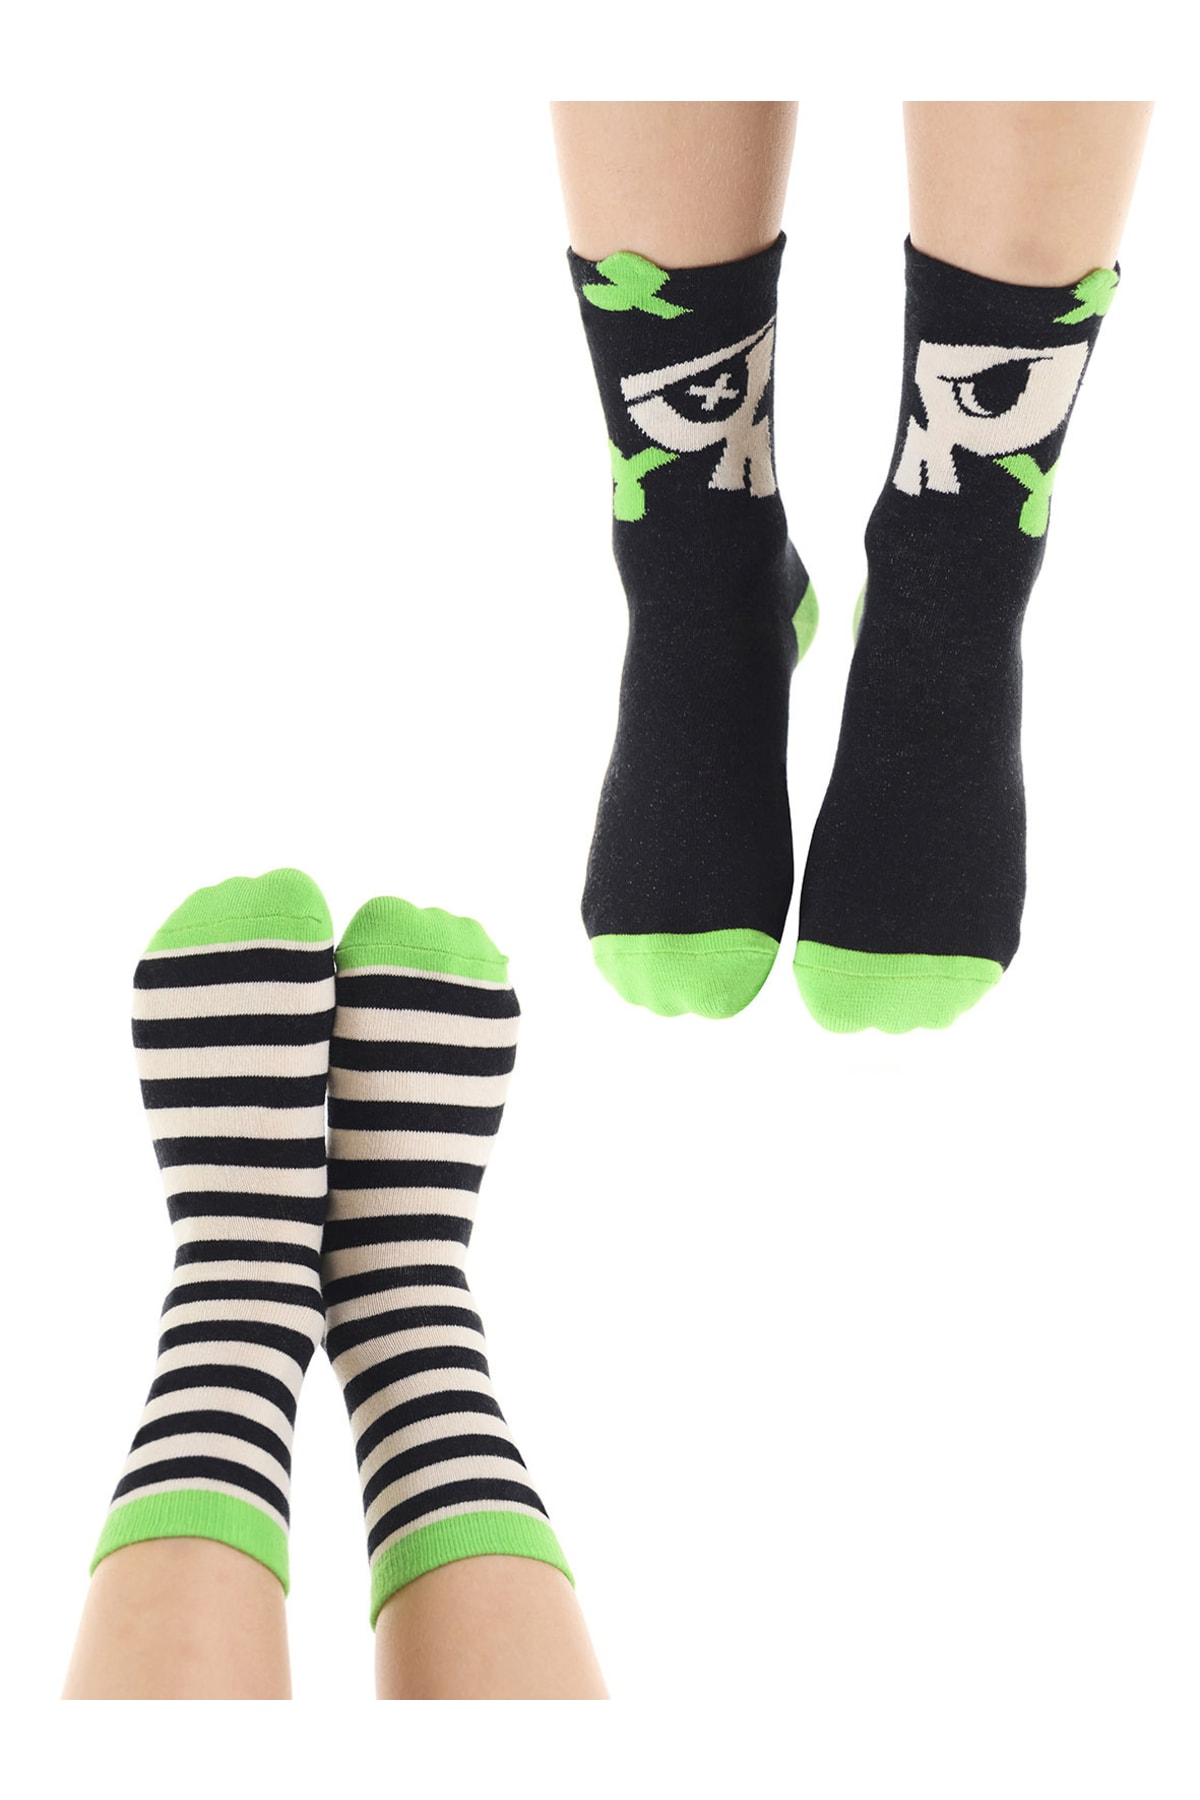 Mushi Pirate Boy 2 Pack Socket Socks Set